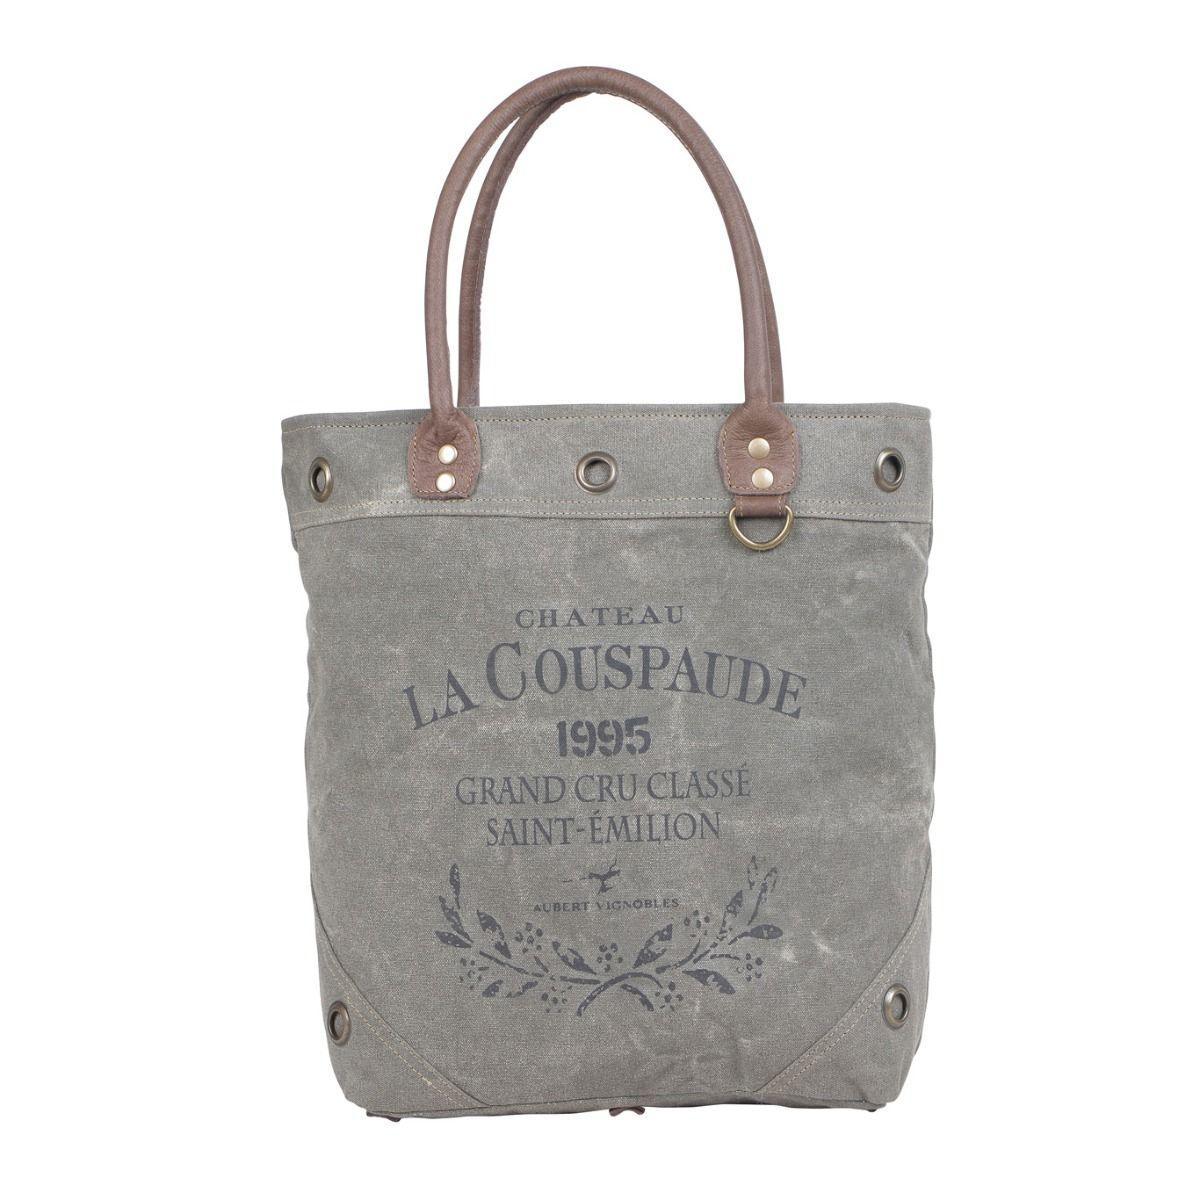 Cosmo Tote Bag from Brooklyn Bag at Moosestrum.com